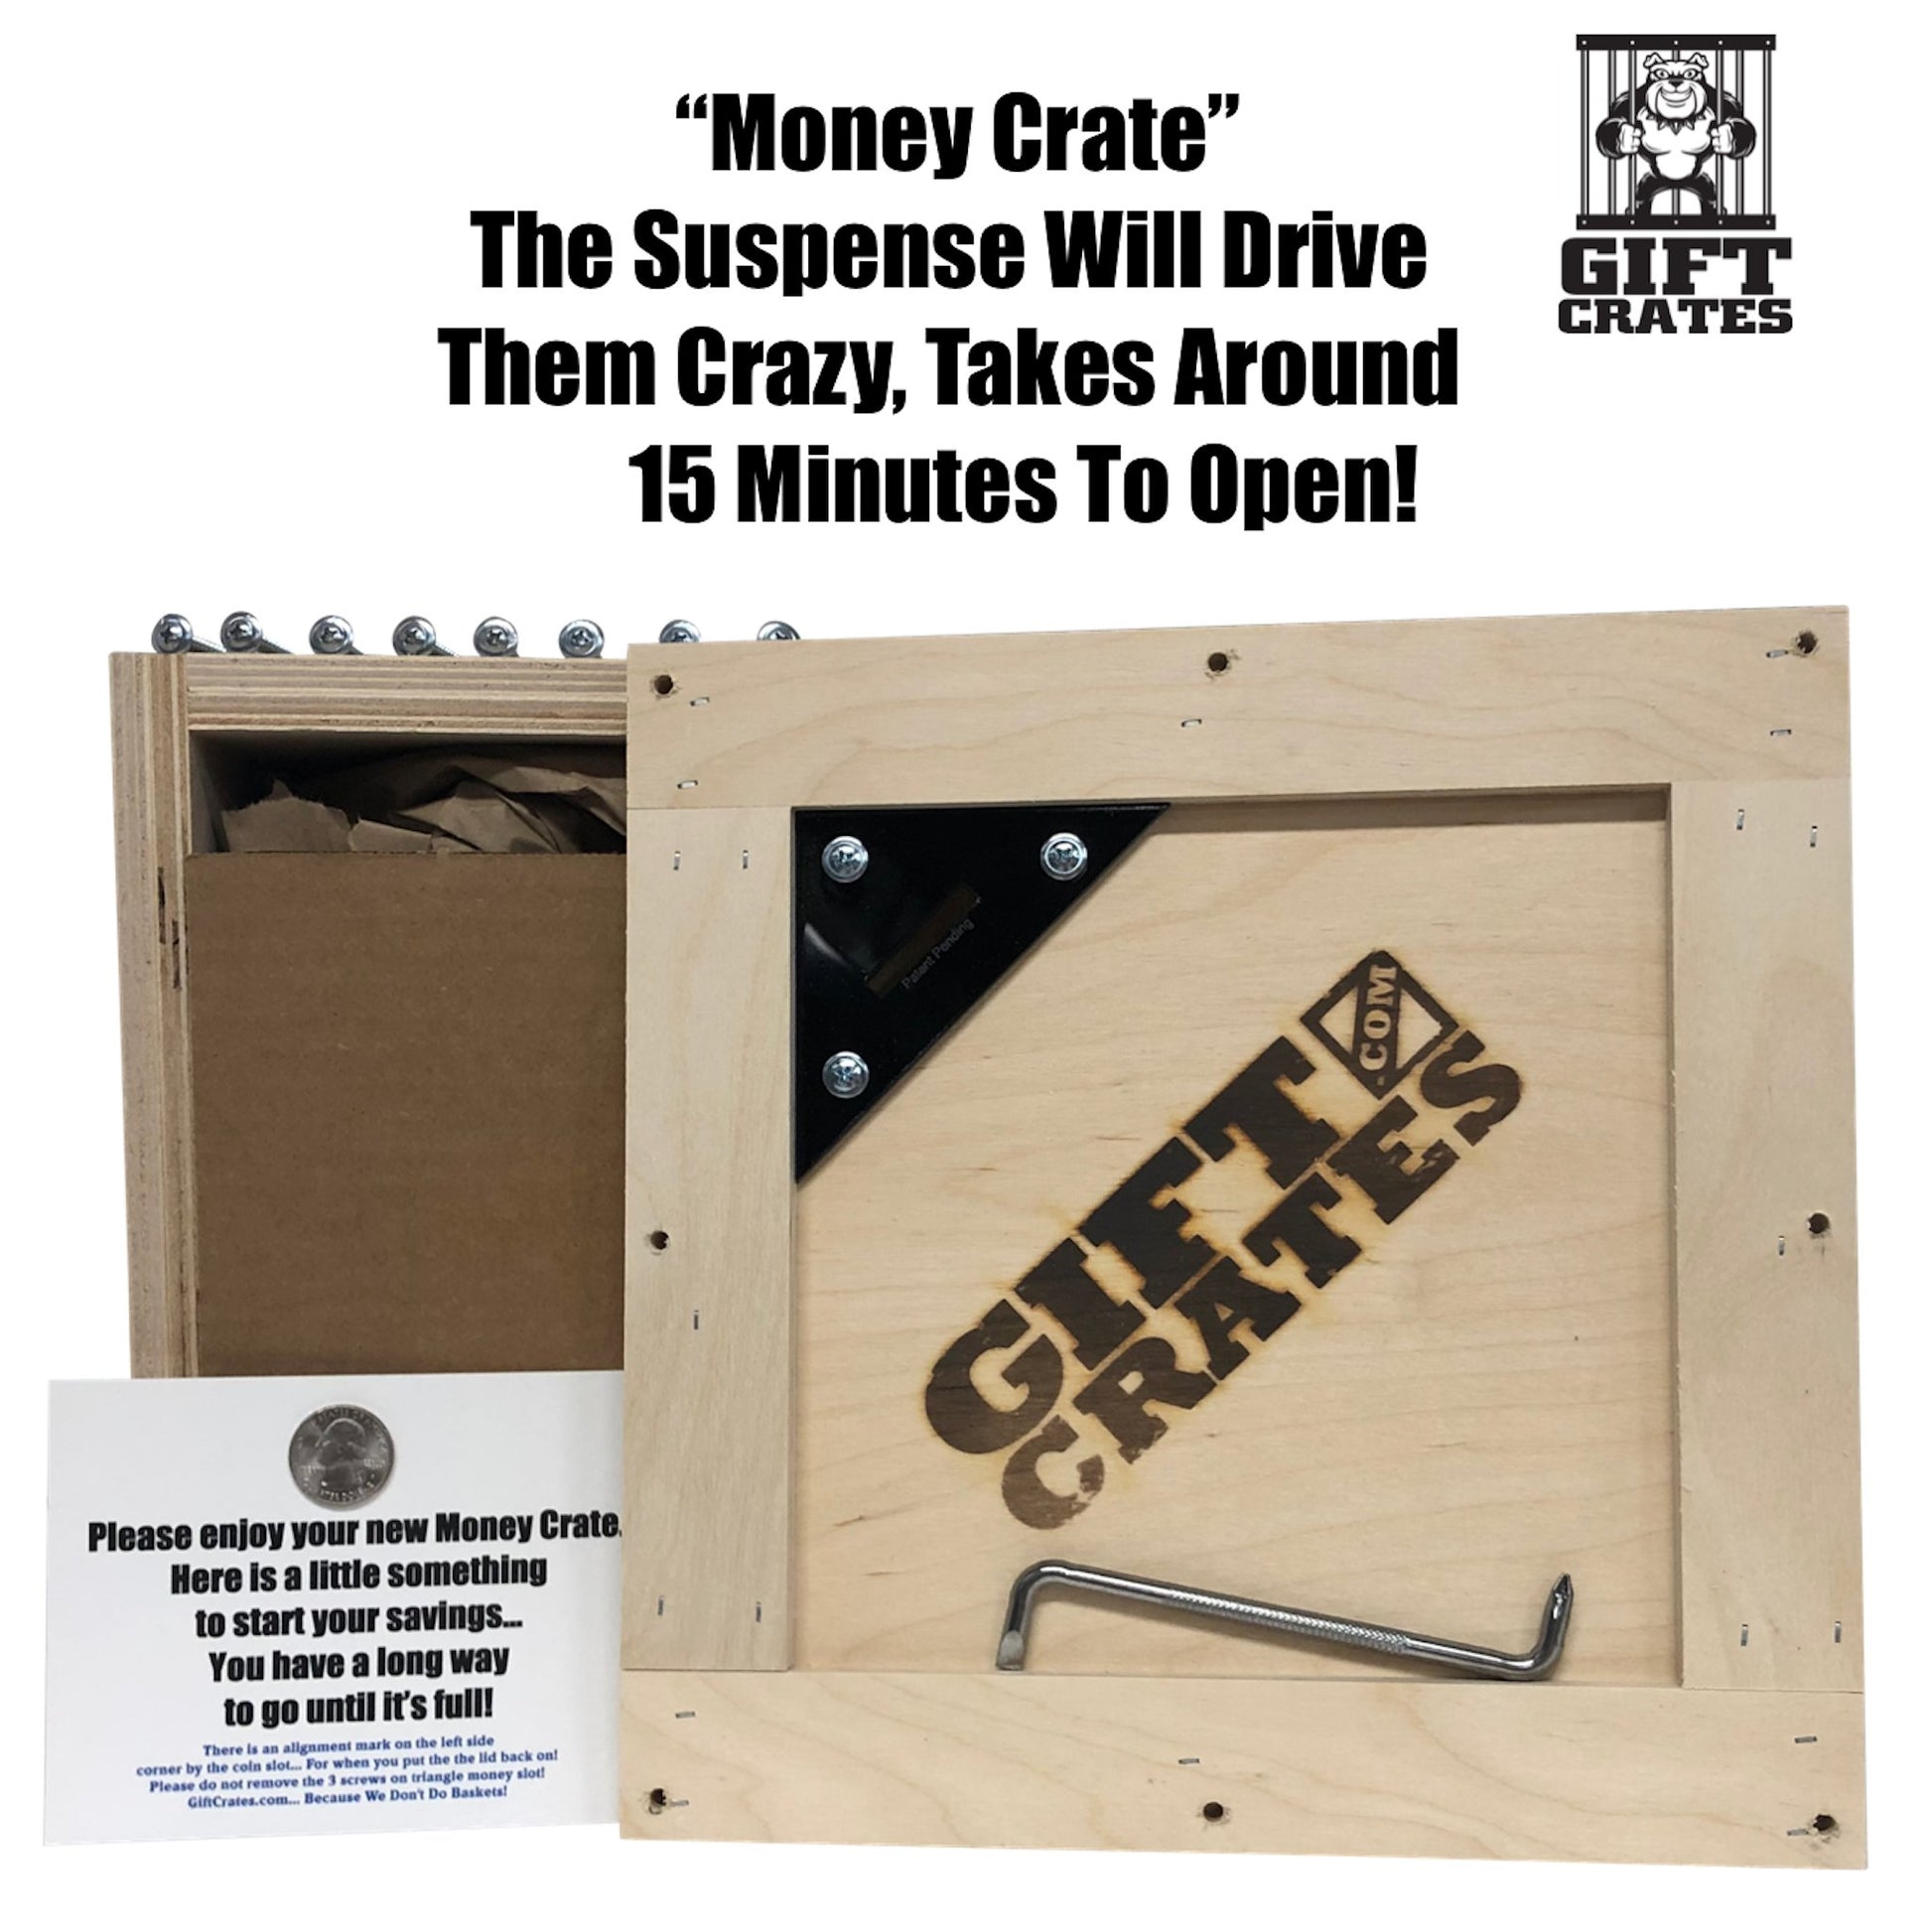 Basketball Barware Crate - Gift Crates